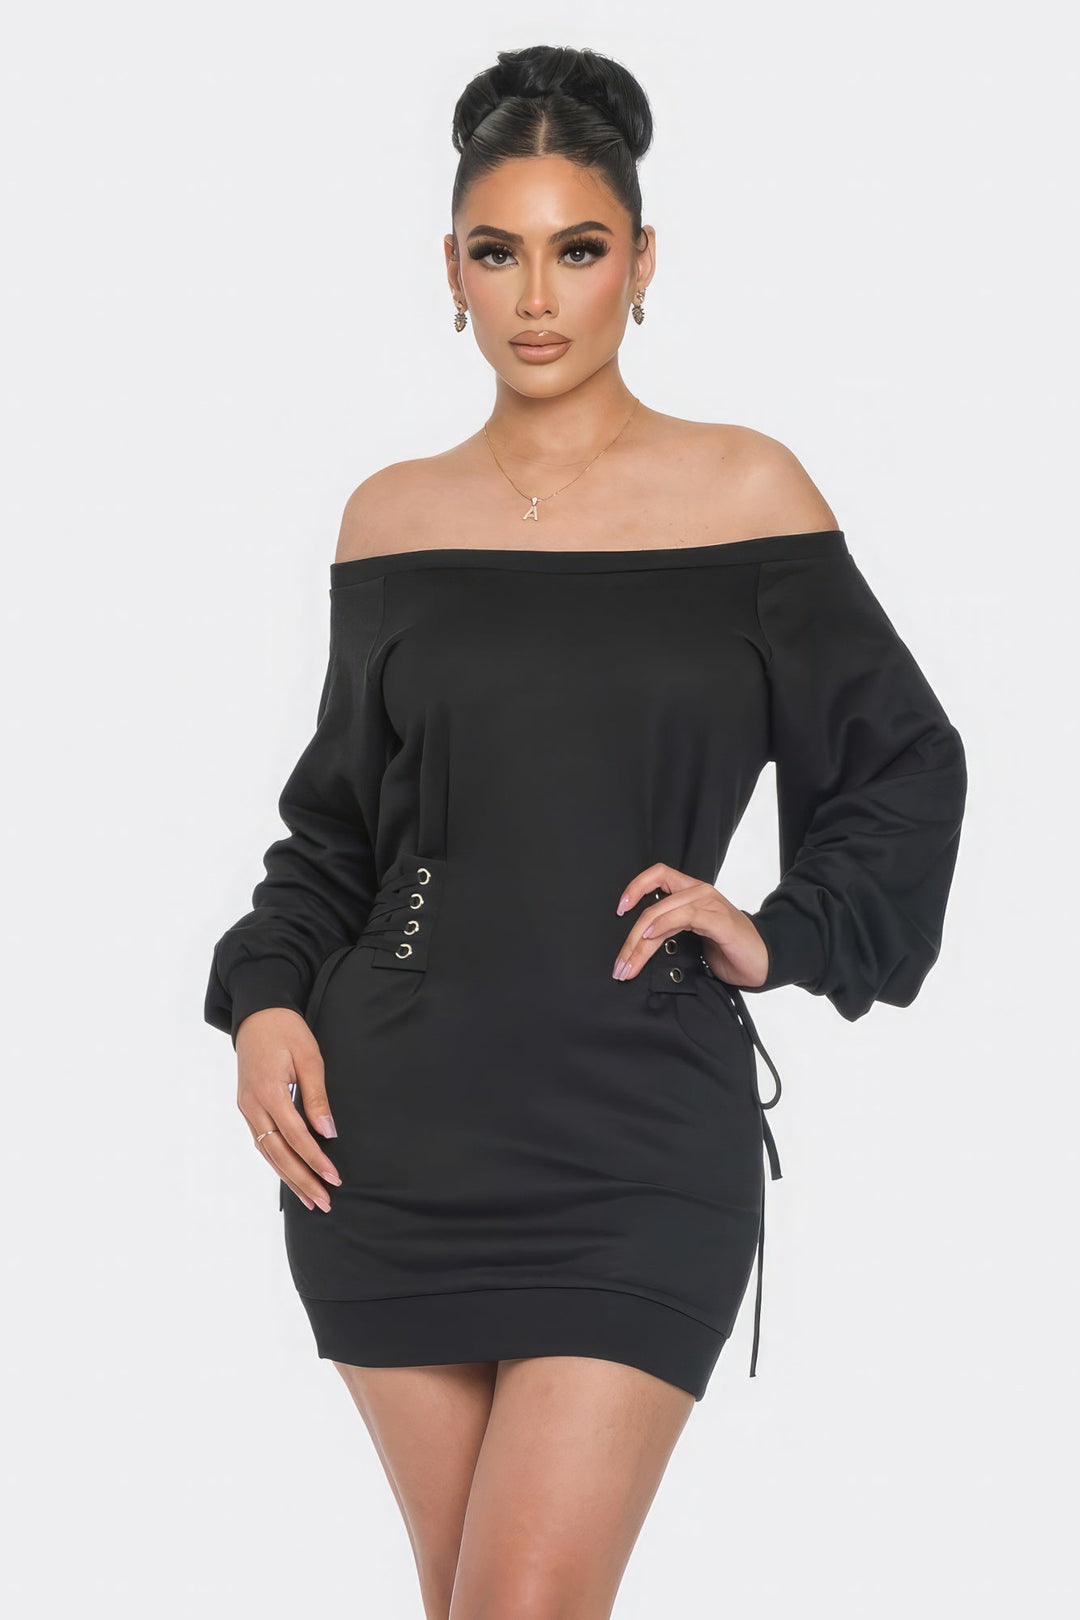 The802Gypsy  Dresses Black / S ❤GYPSY LOVE-Off Shoulder Mini Dress